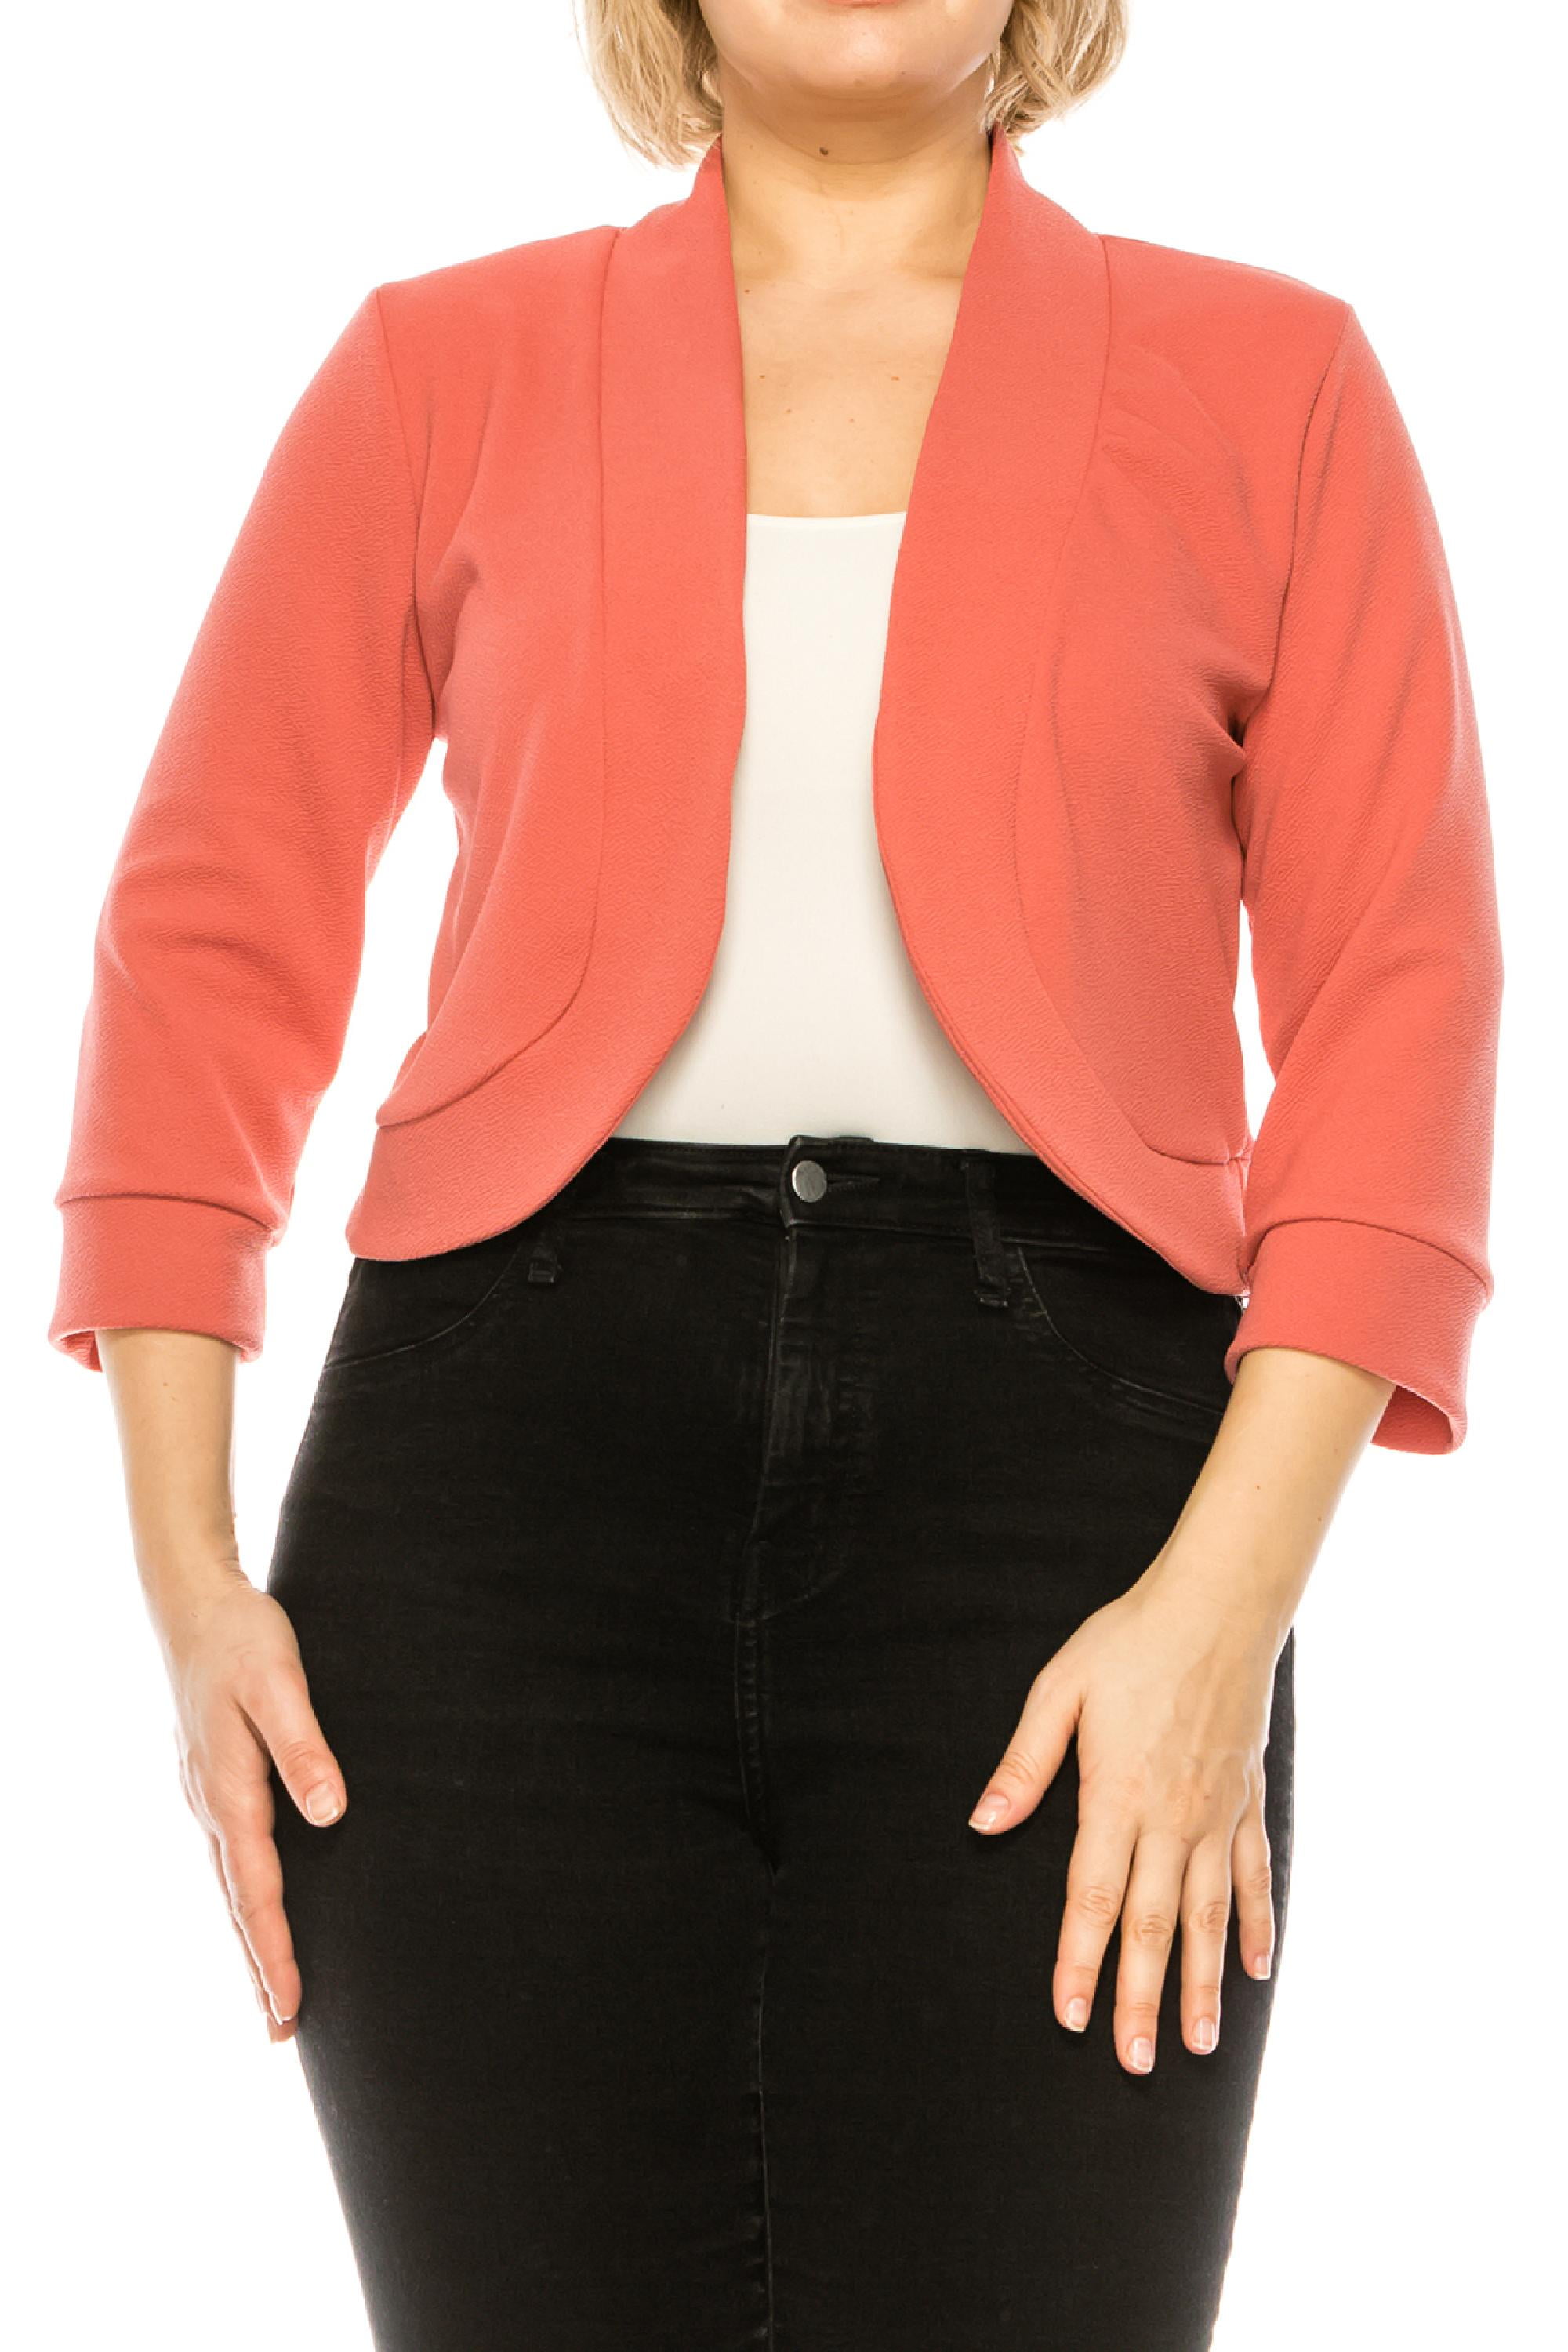 Plaid Shirts for Women Plus Size 3/4 Sleeve Button Up Shirt Lightweight Lapel Jacket Open Front Cardigan 